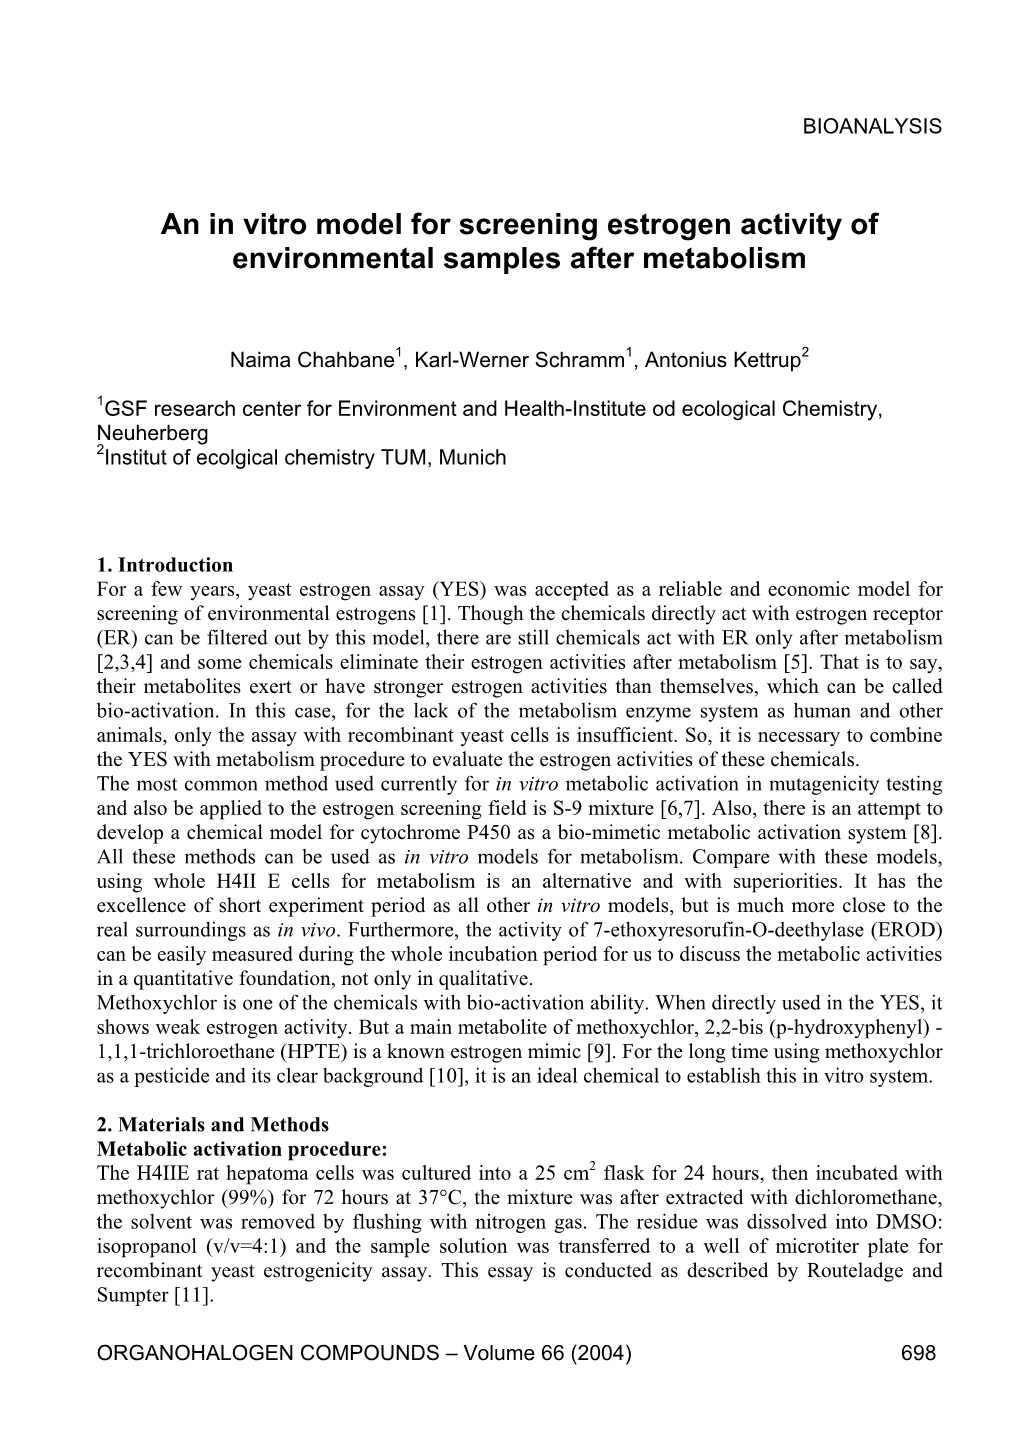 An in Vitro Model for Screening Estrogen Activity of Environmental Samples After Metabolism